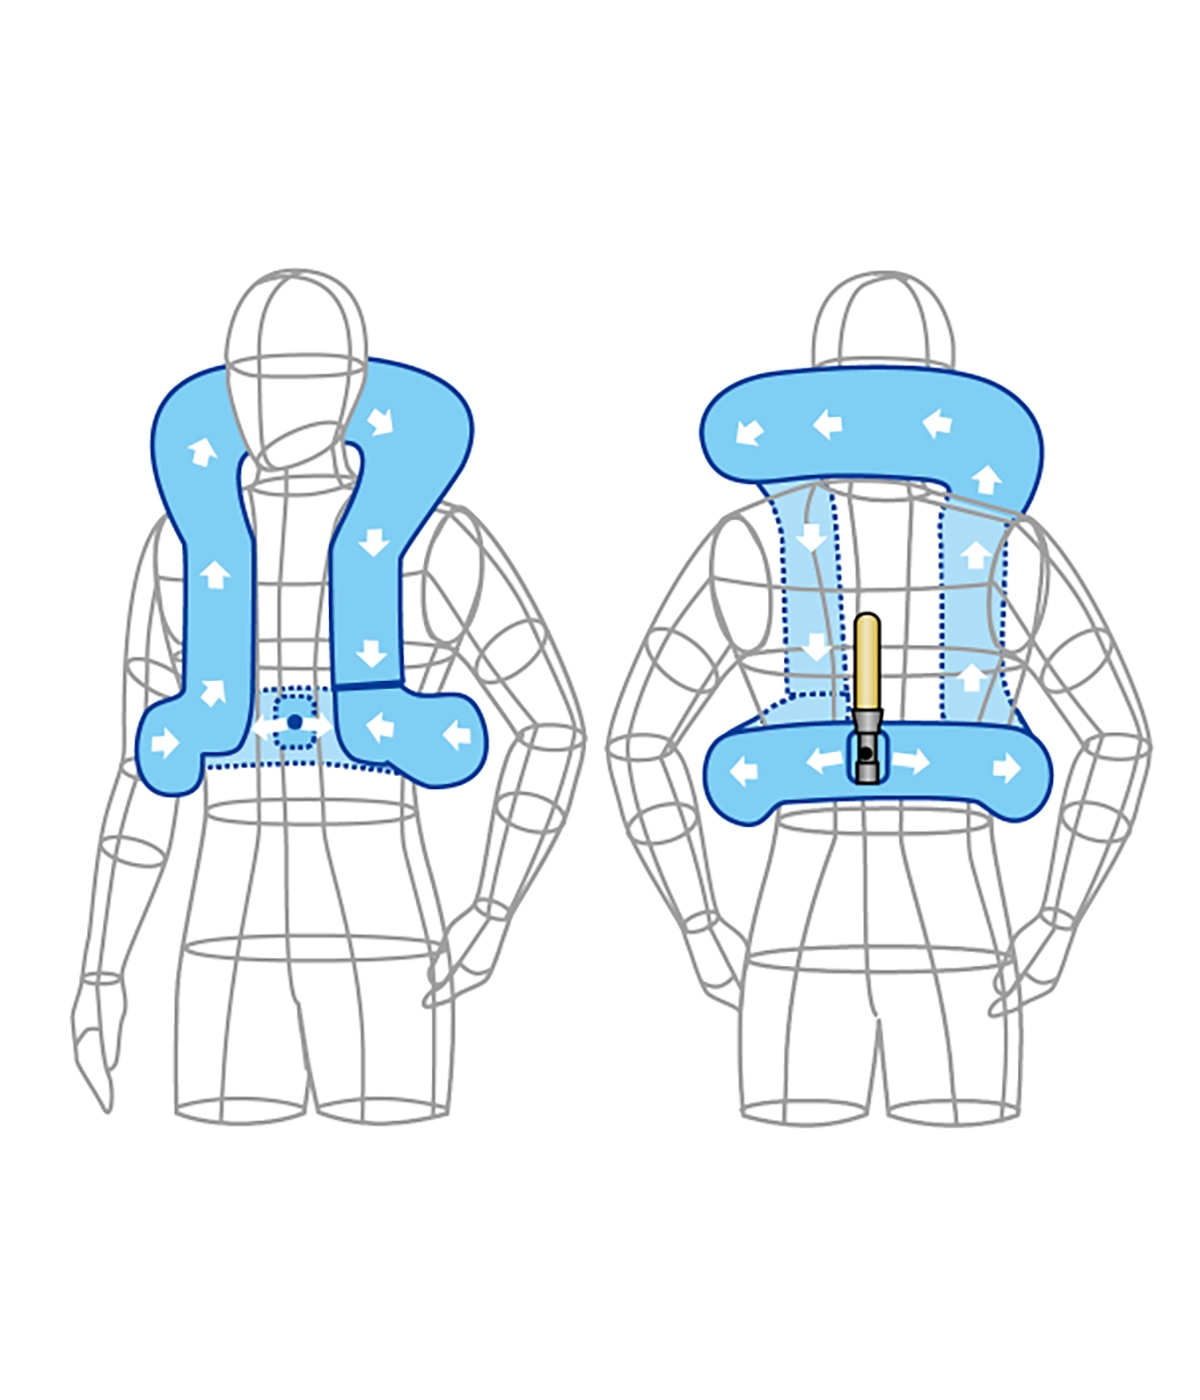 RS-1 | 頚部への保護を重視 | バイク用製品 | ヒットエアー - hit-air - 着用するエアバッグ | 無限電光株式会社